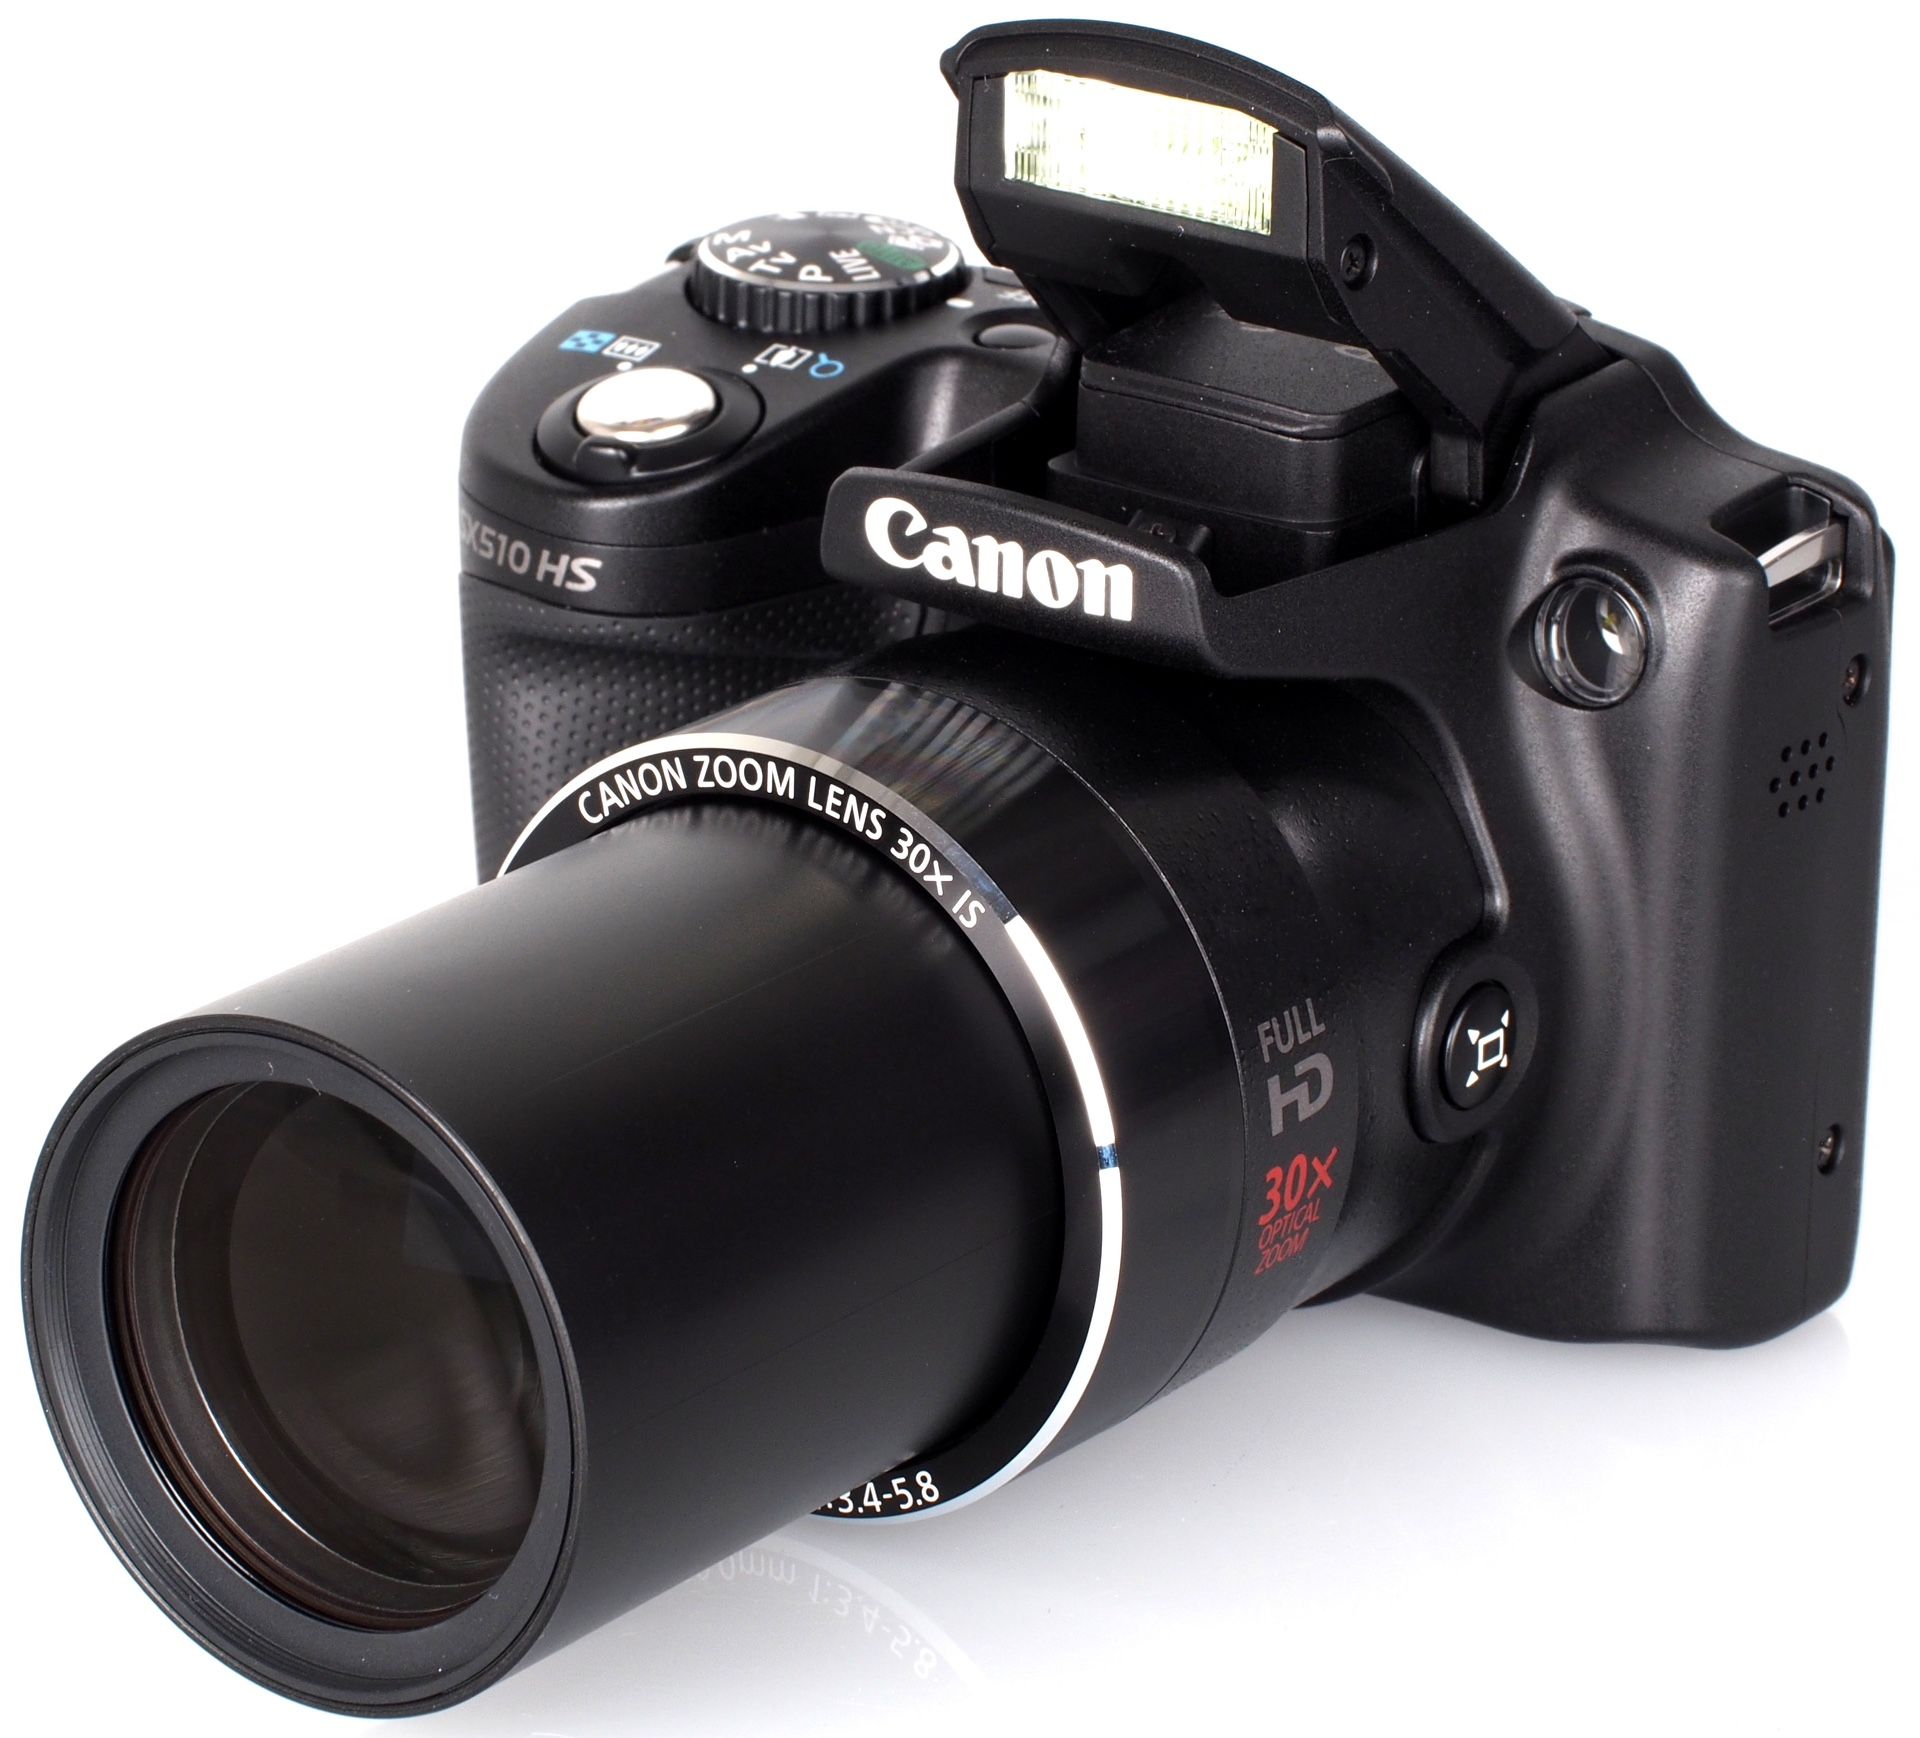 Canon Powershot sx510 hs Digital Camera